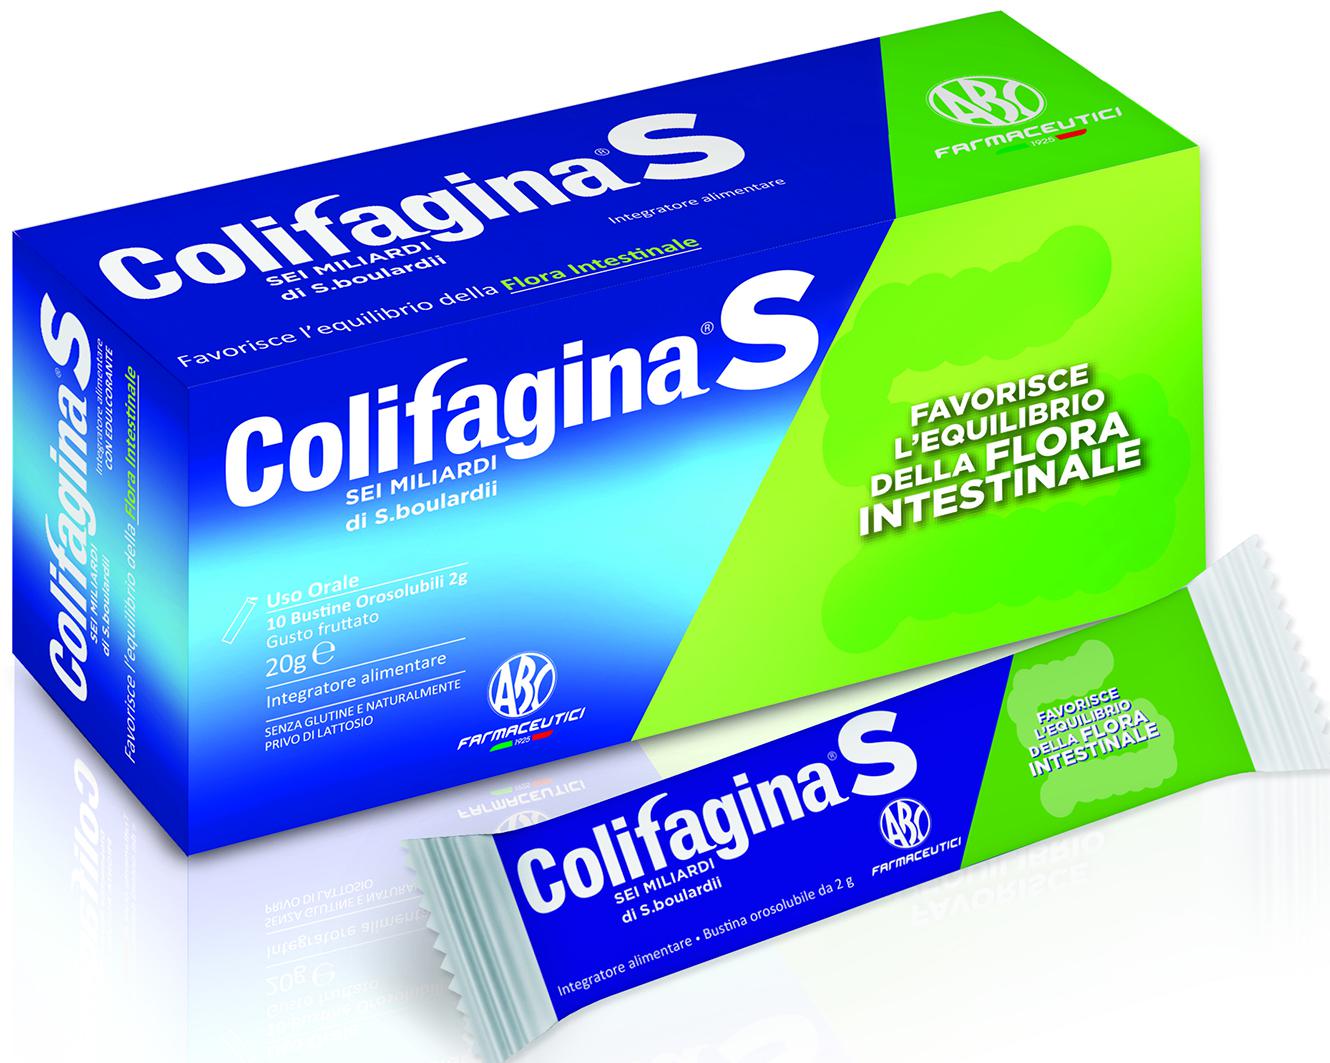 Colifagina S